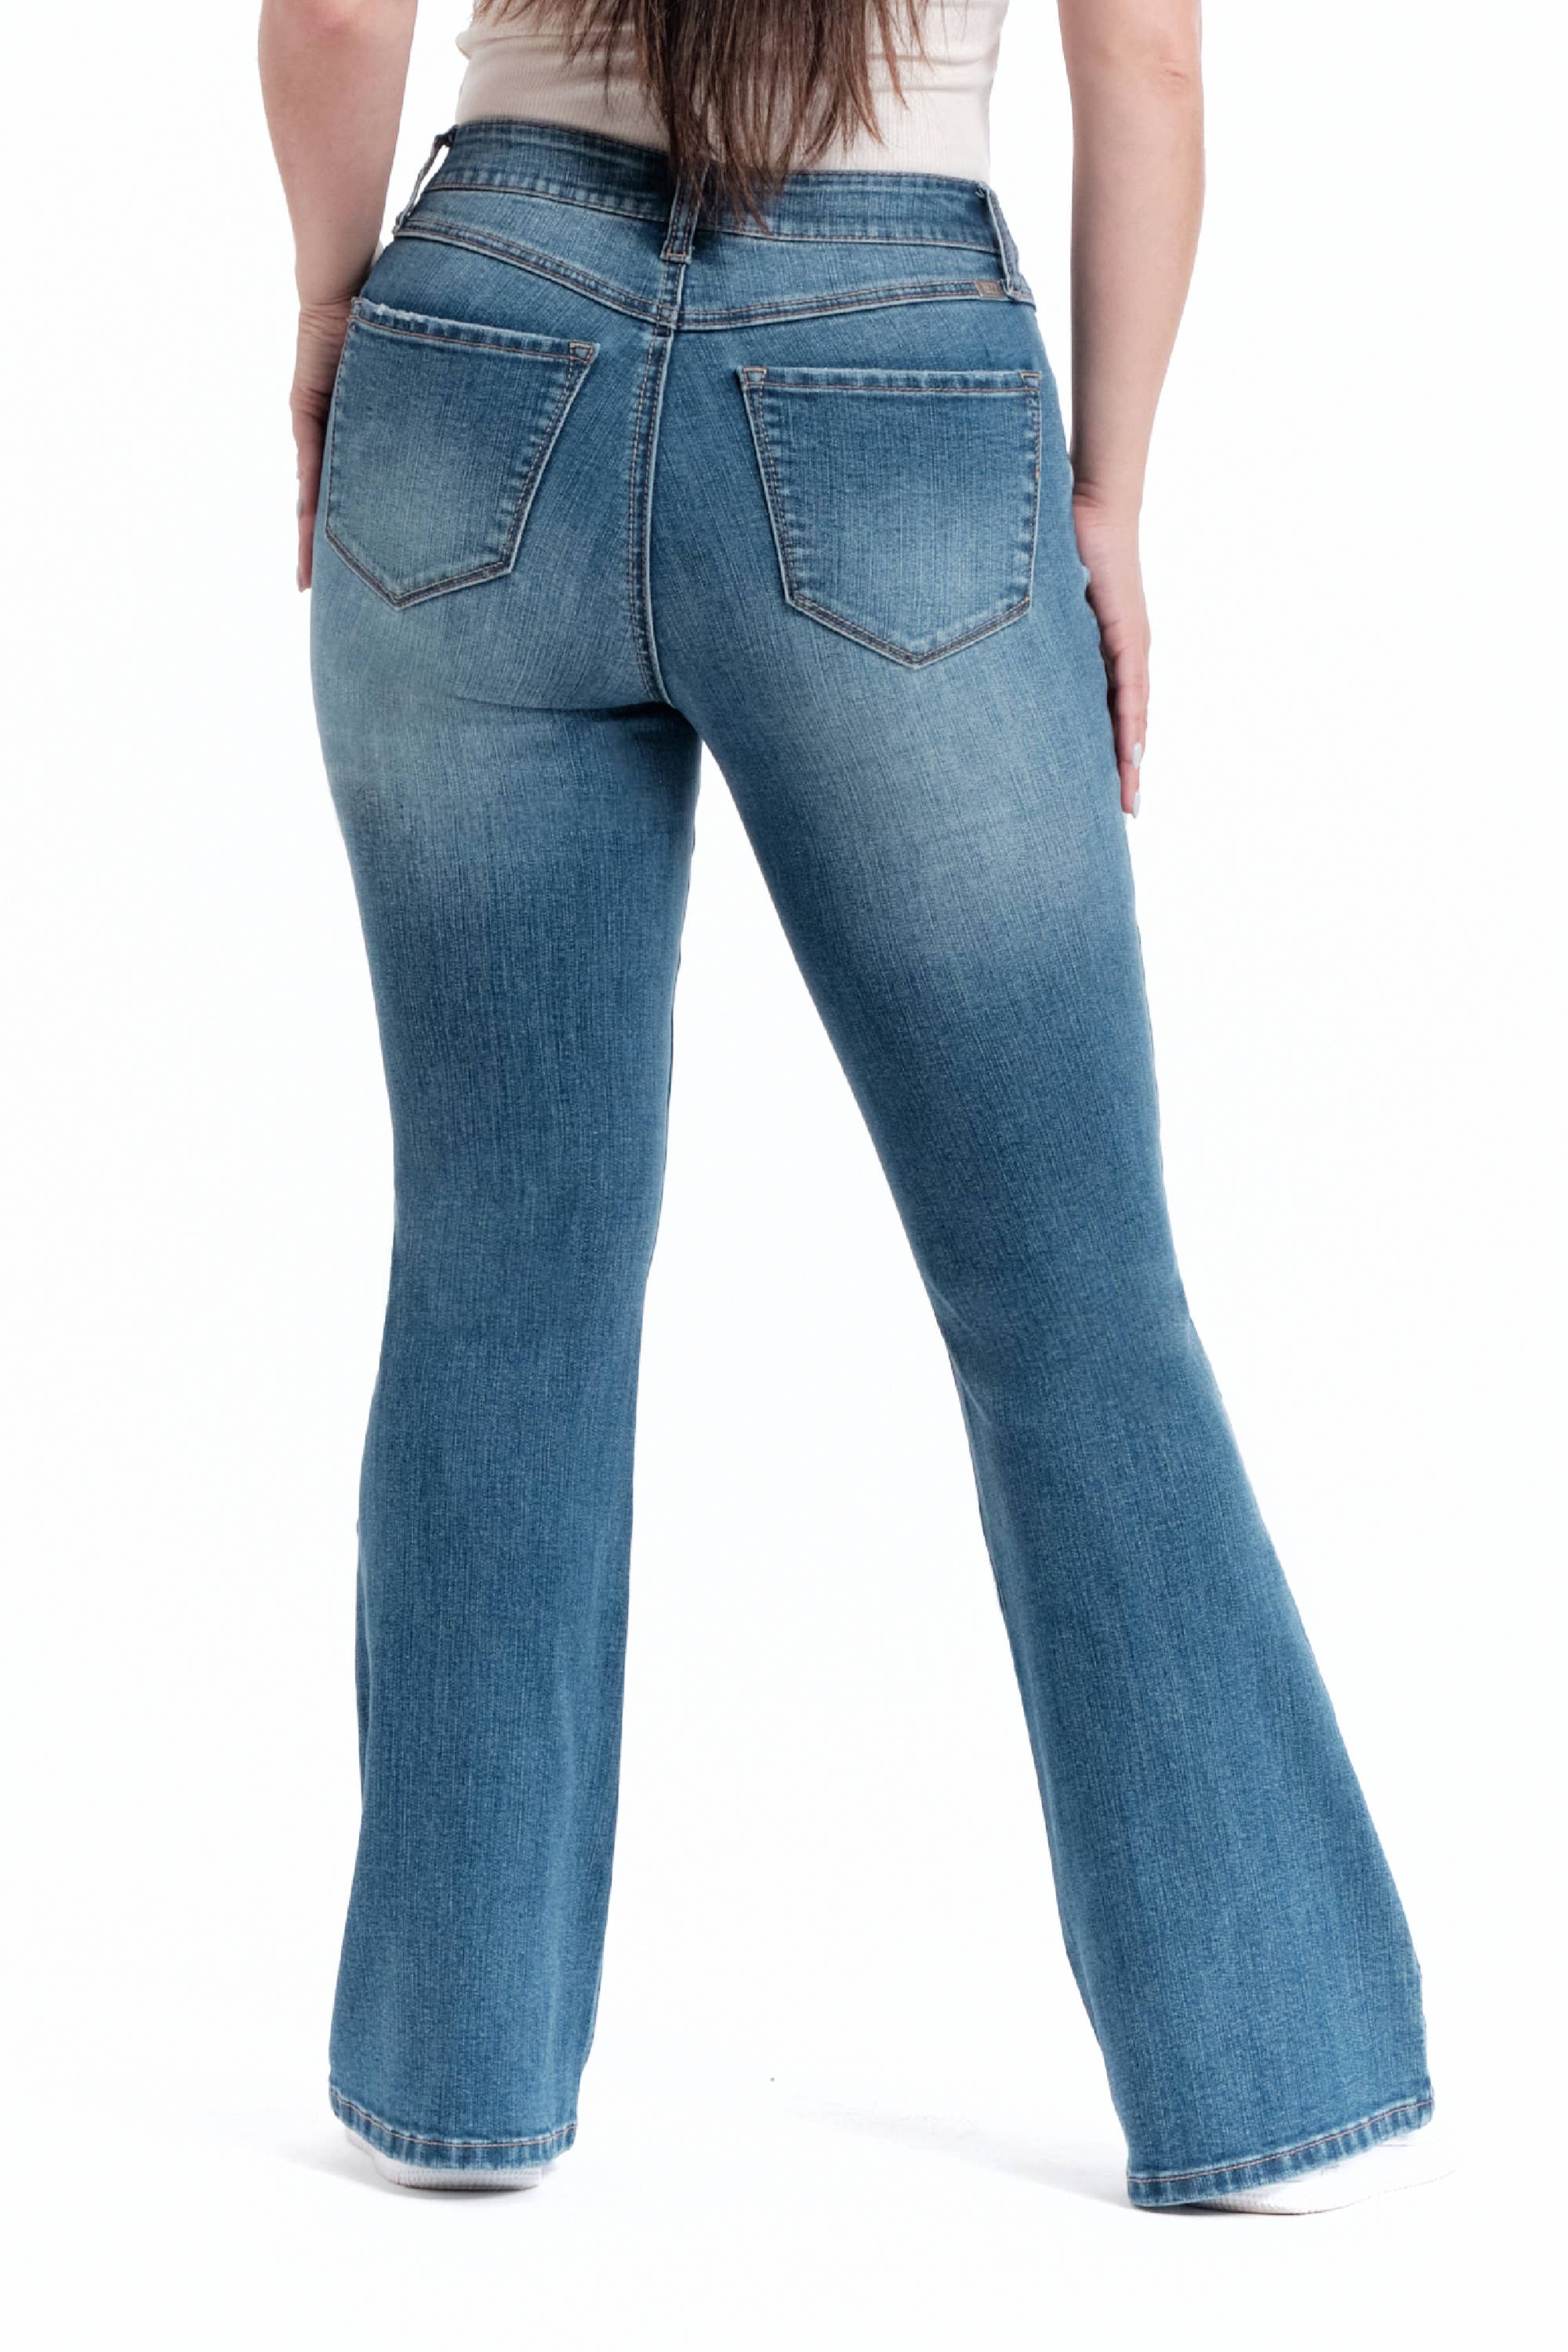 PETITE Vintage Mid-Rise Jean 29" Inseam